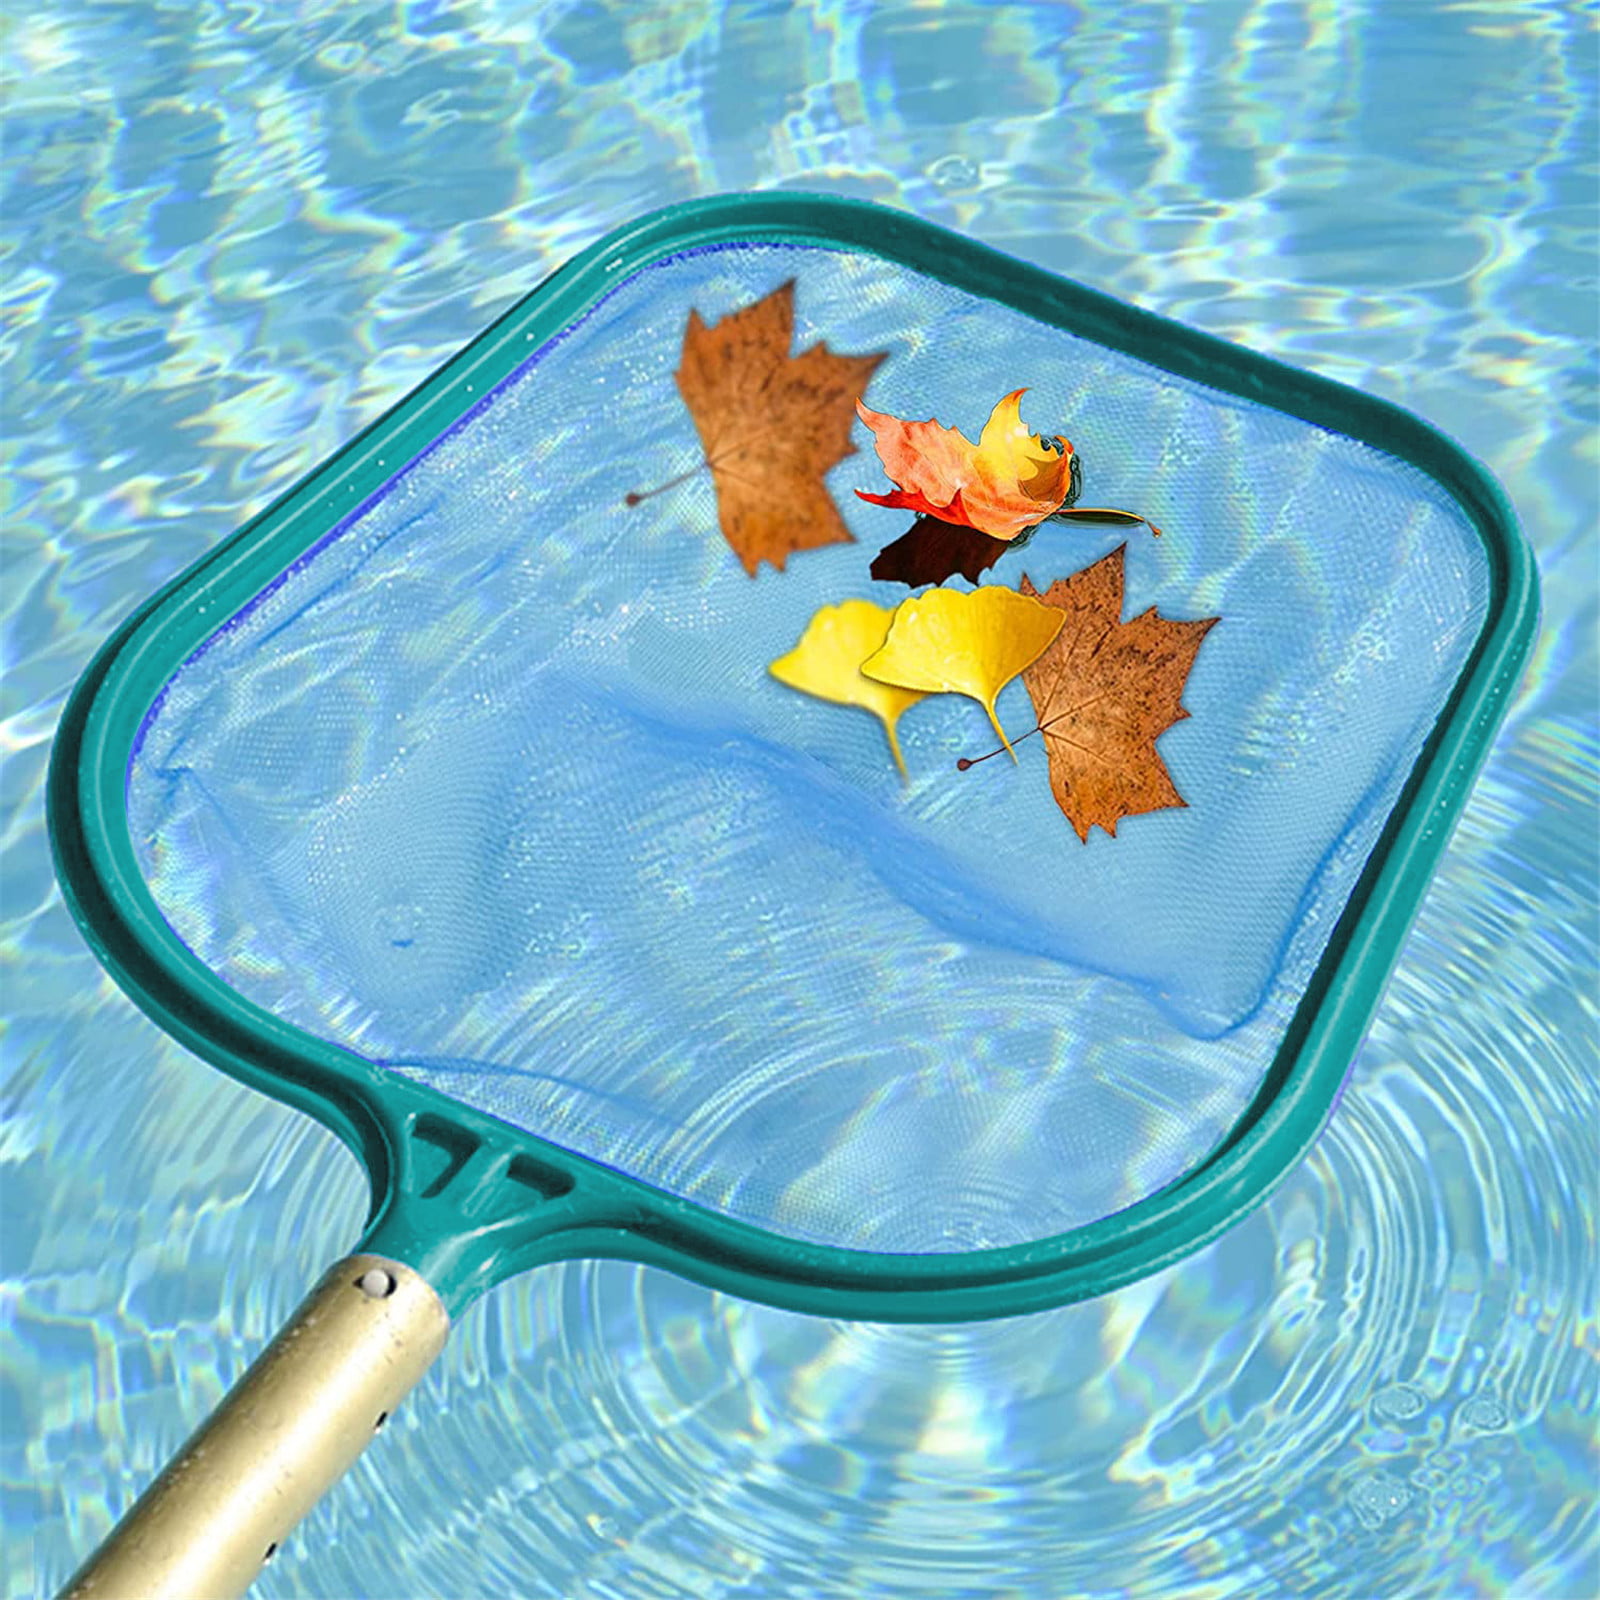 Professional Leaf Rake Mesh Frame Net Skimmer Cleaner Swimming Pool Spa Tool Hot